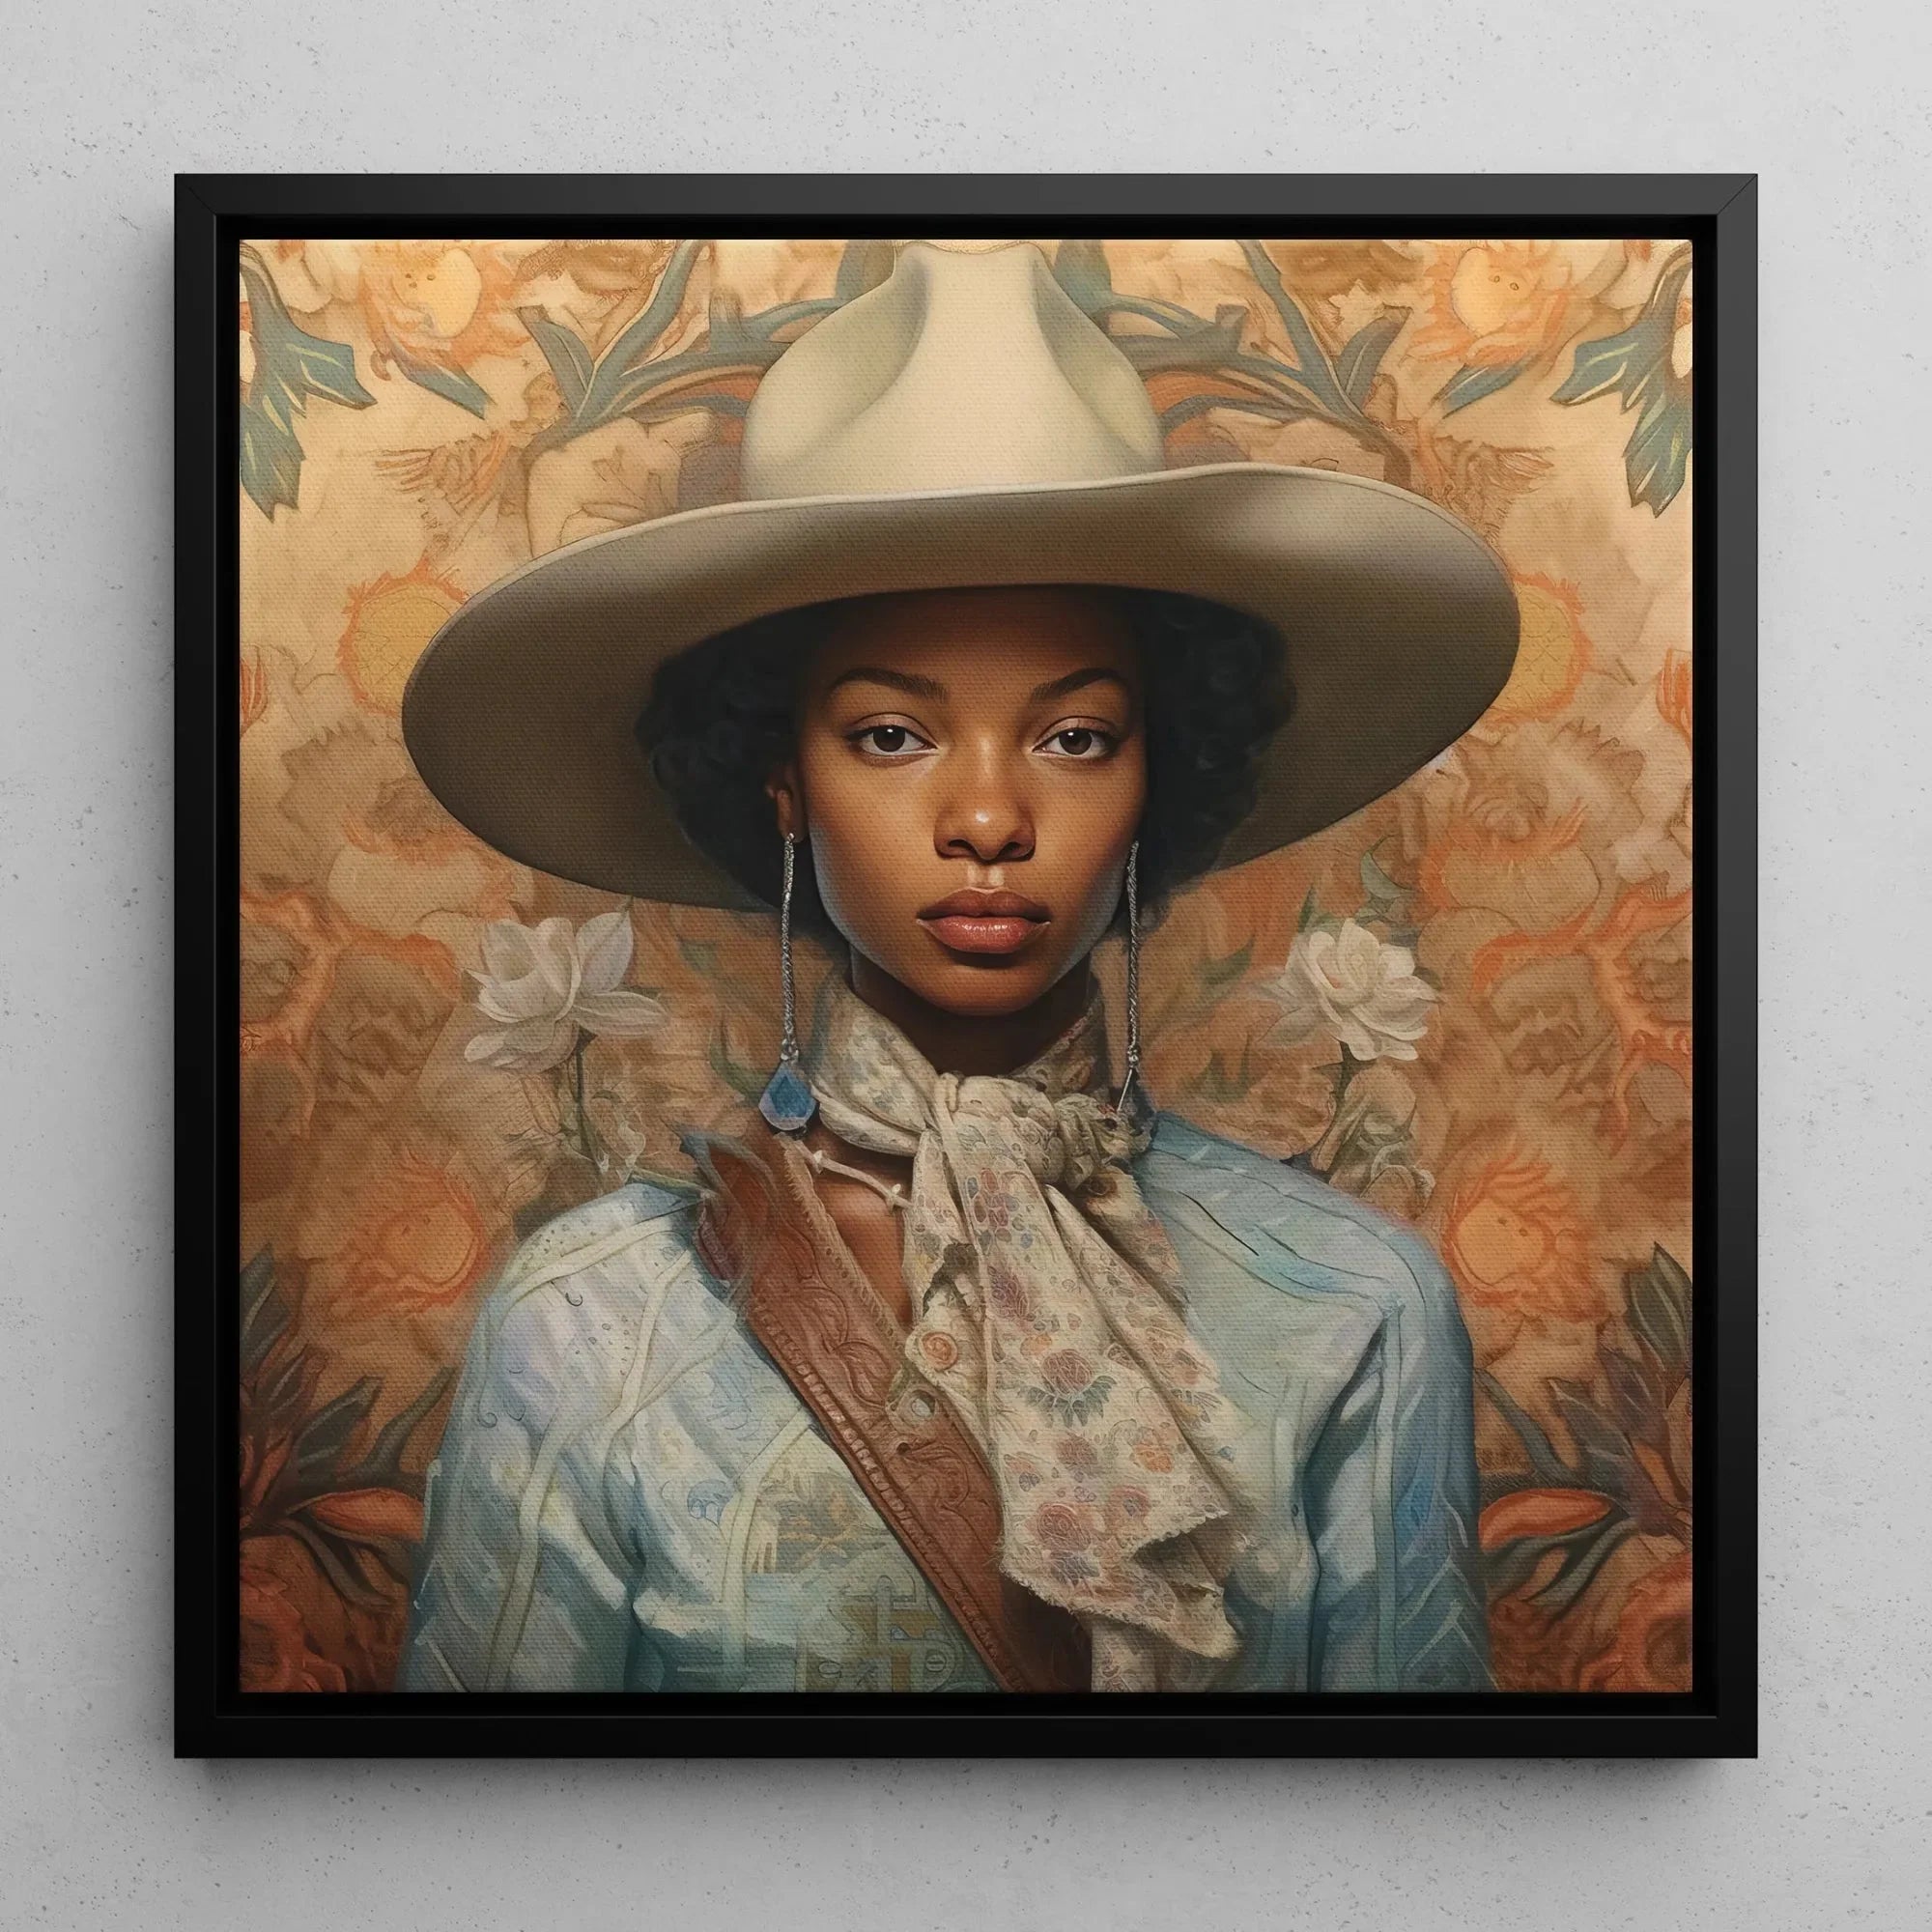 Imani - Lesbian Black Cowgirl Framed Canvas - Wlw Sapphic Art - Posters Prints & Visual Artwork - Aesthetic Art